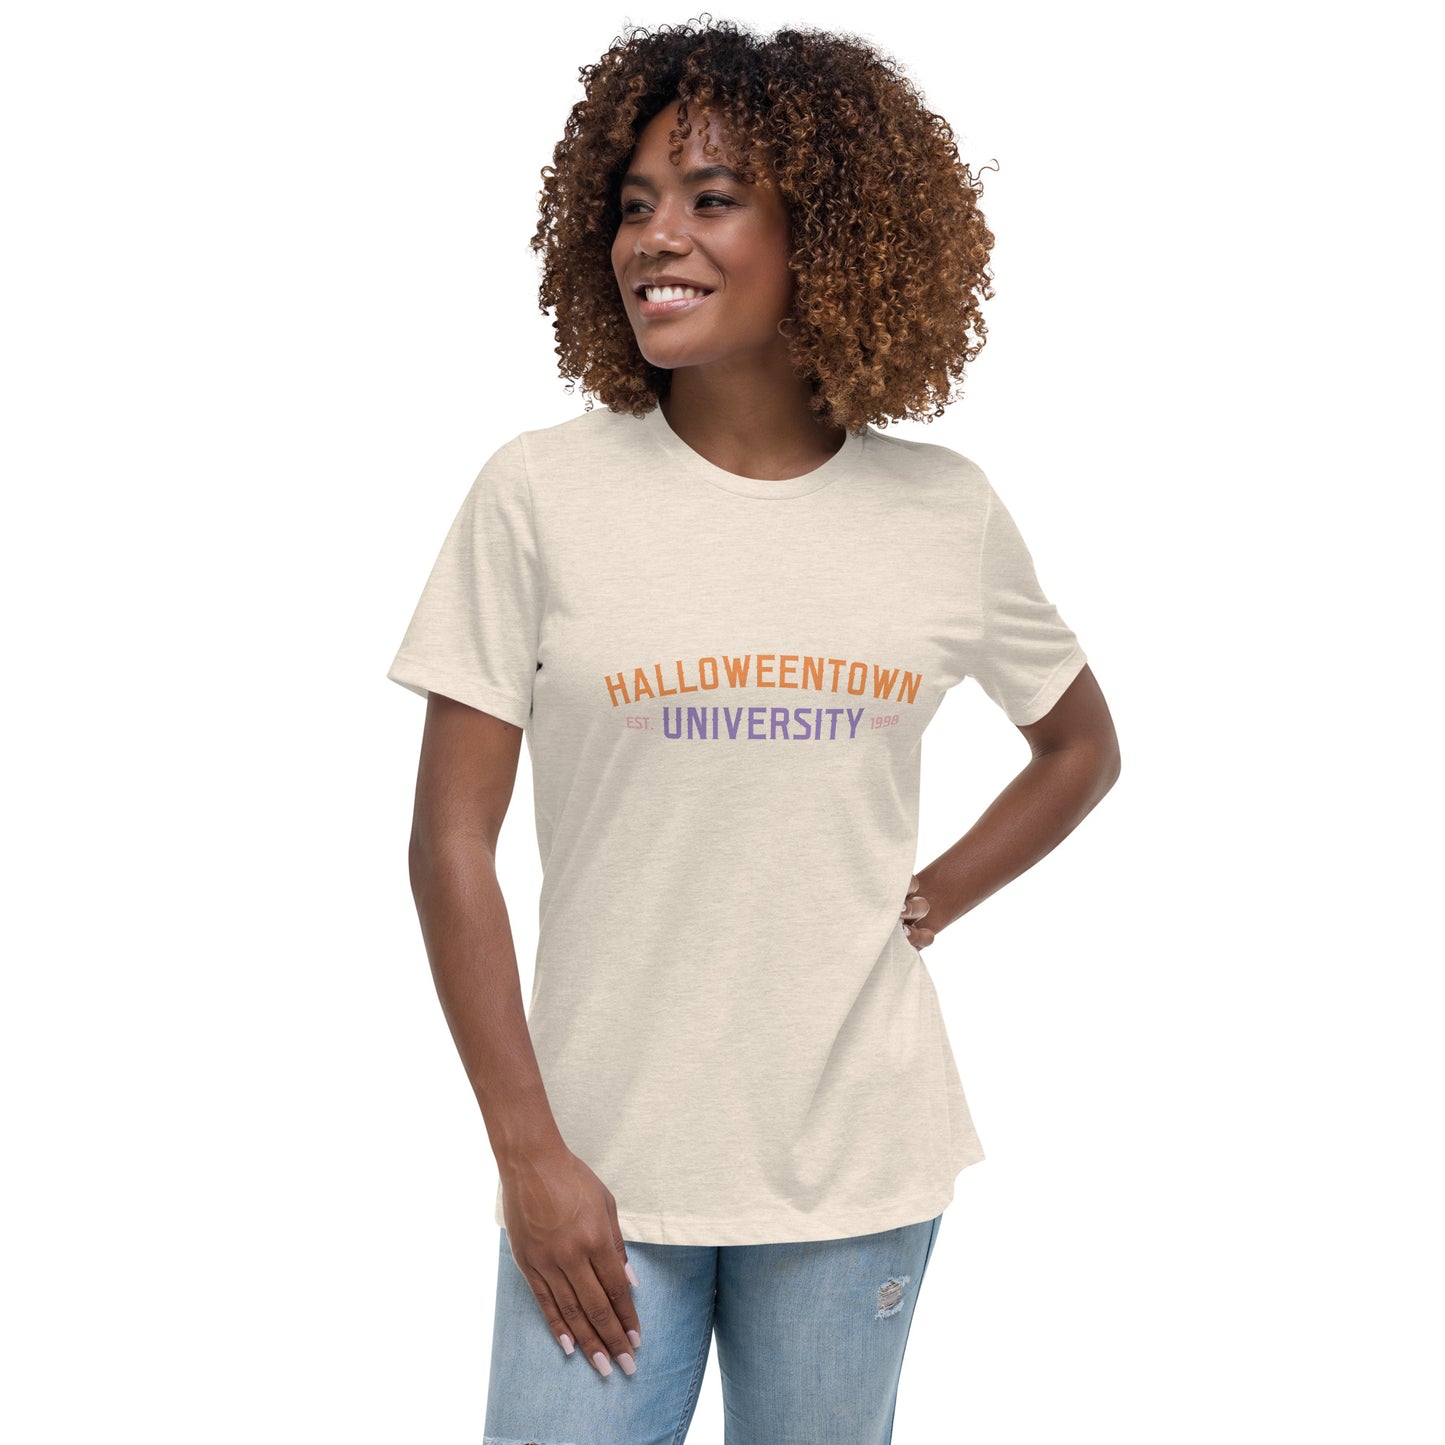 Halloweentown University Women's Relaxed T-Shirt Tee Tshirt